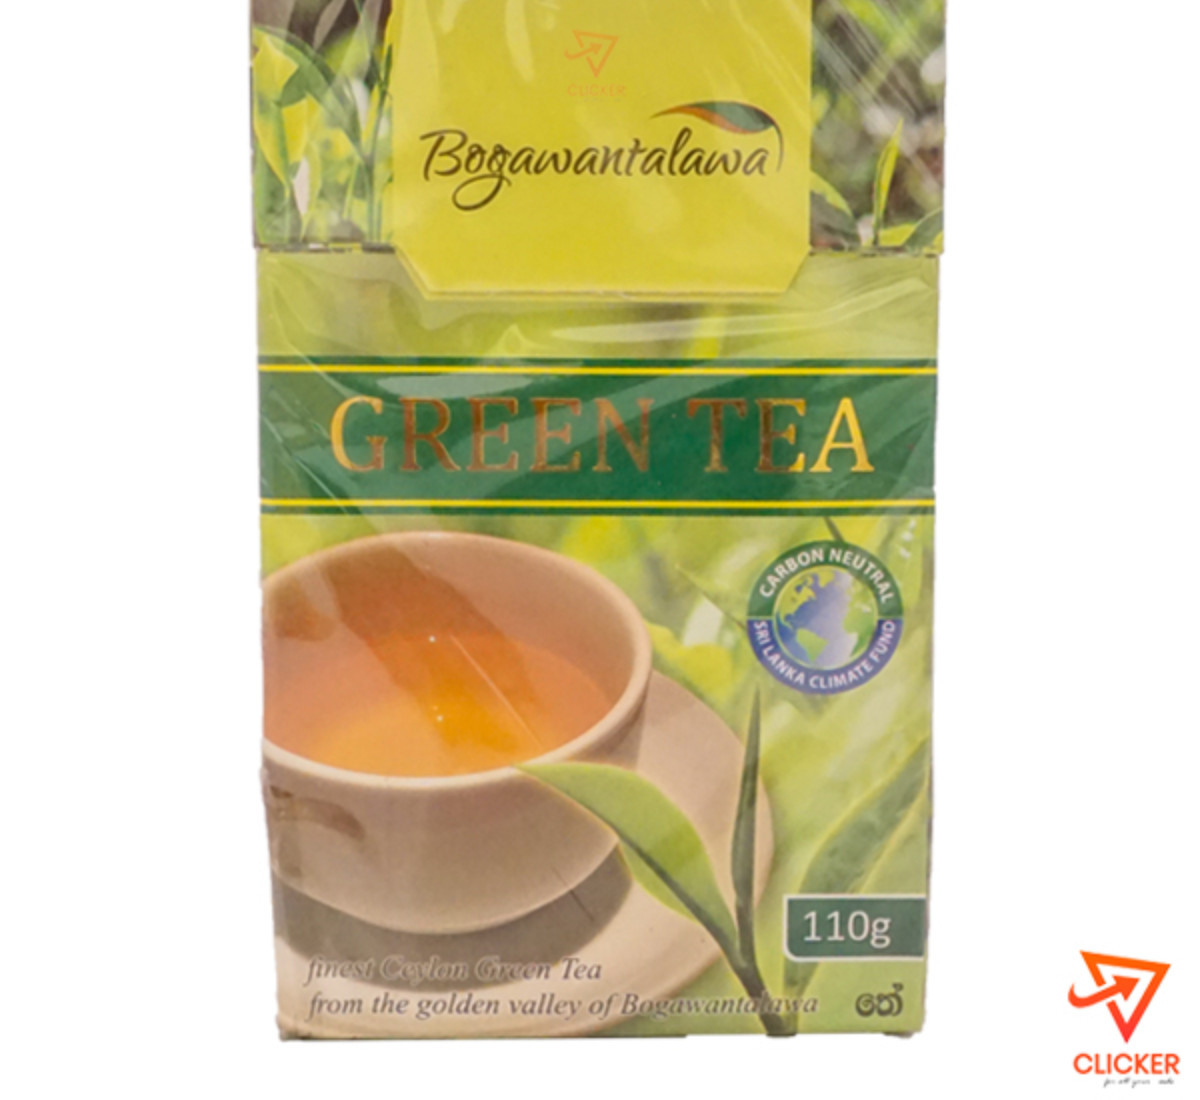 Clicker product 110g BOGAWANTALAWA Green Tea 928